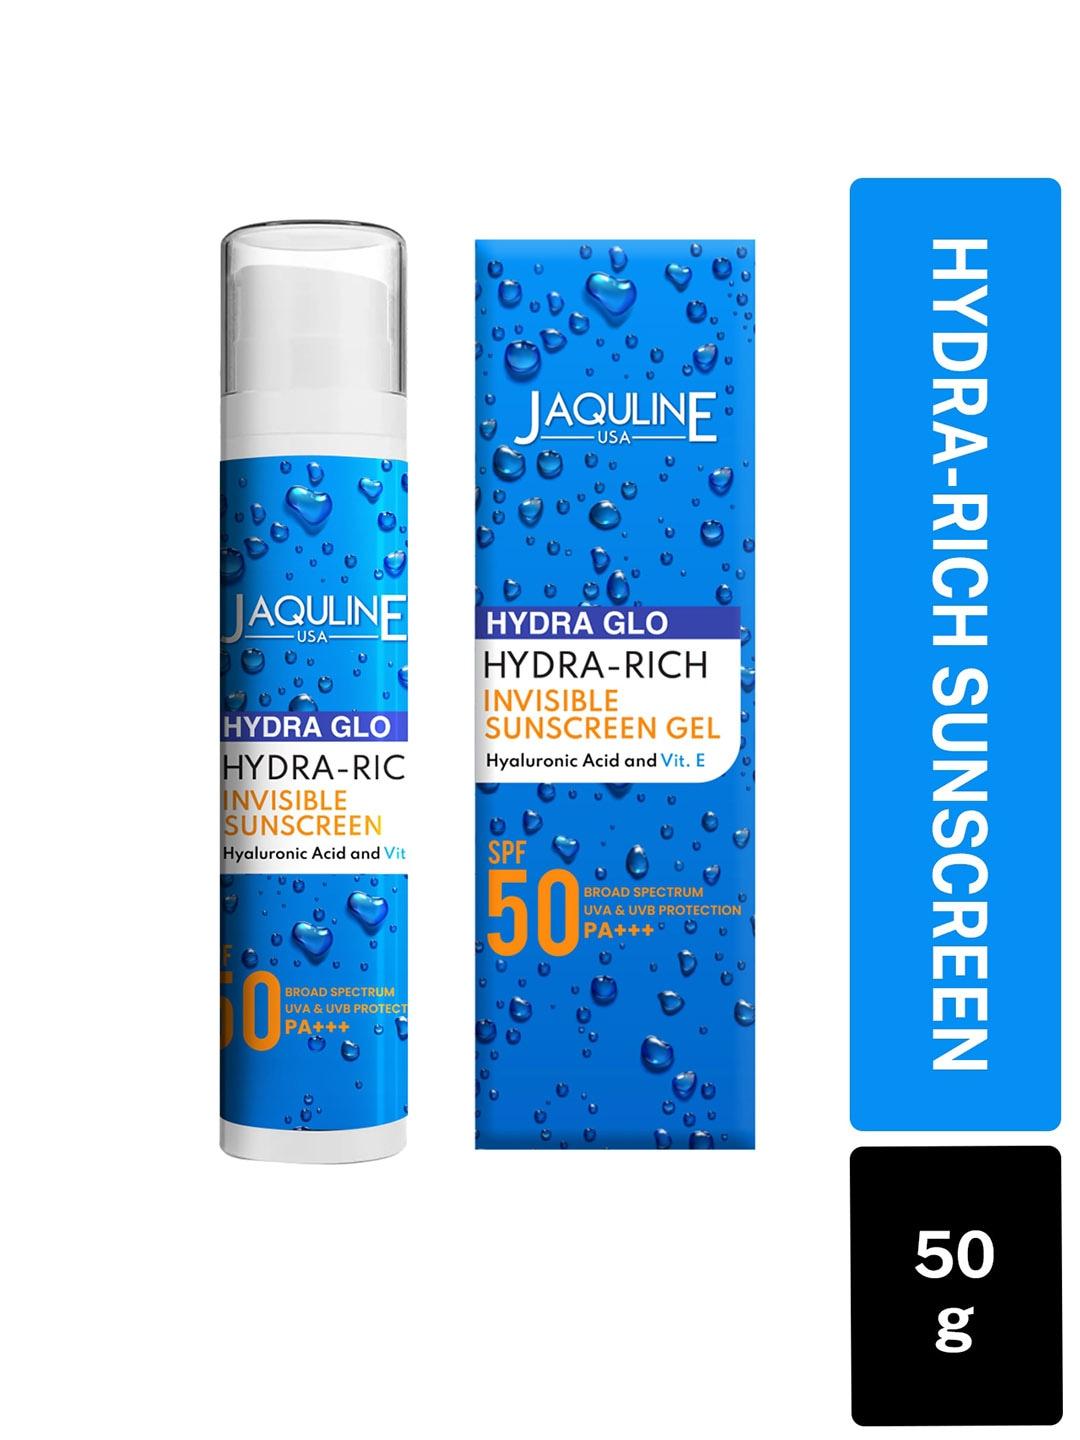 jaquline usa hydra glo spf 50 pa+++ hydra-rich invisible sunscreen - 50g